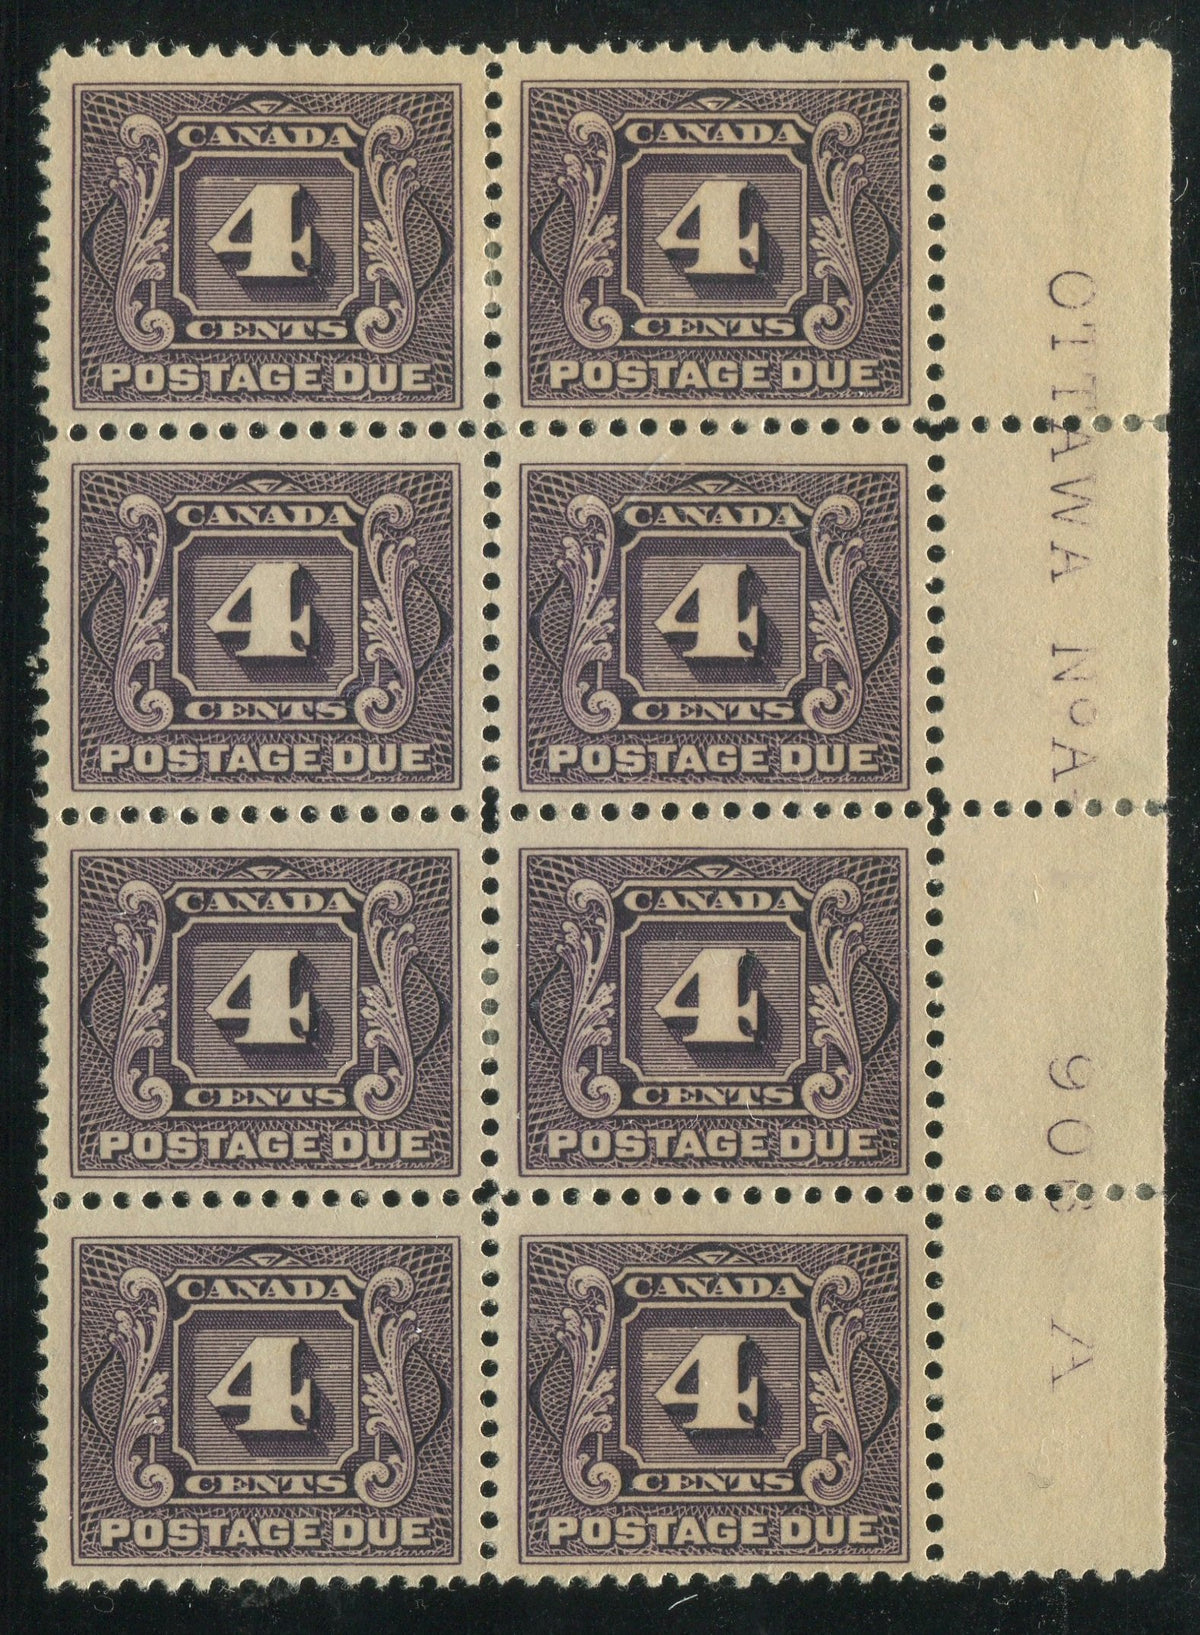 0119CA1710 - Canada J3 - Mint Plate Block of 8